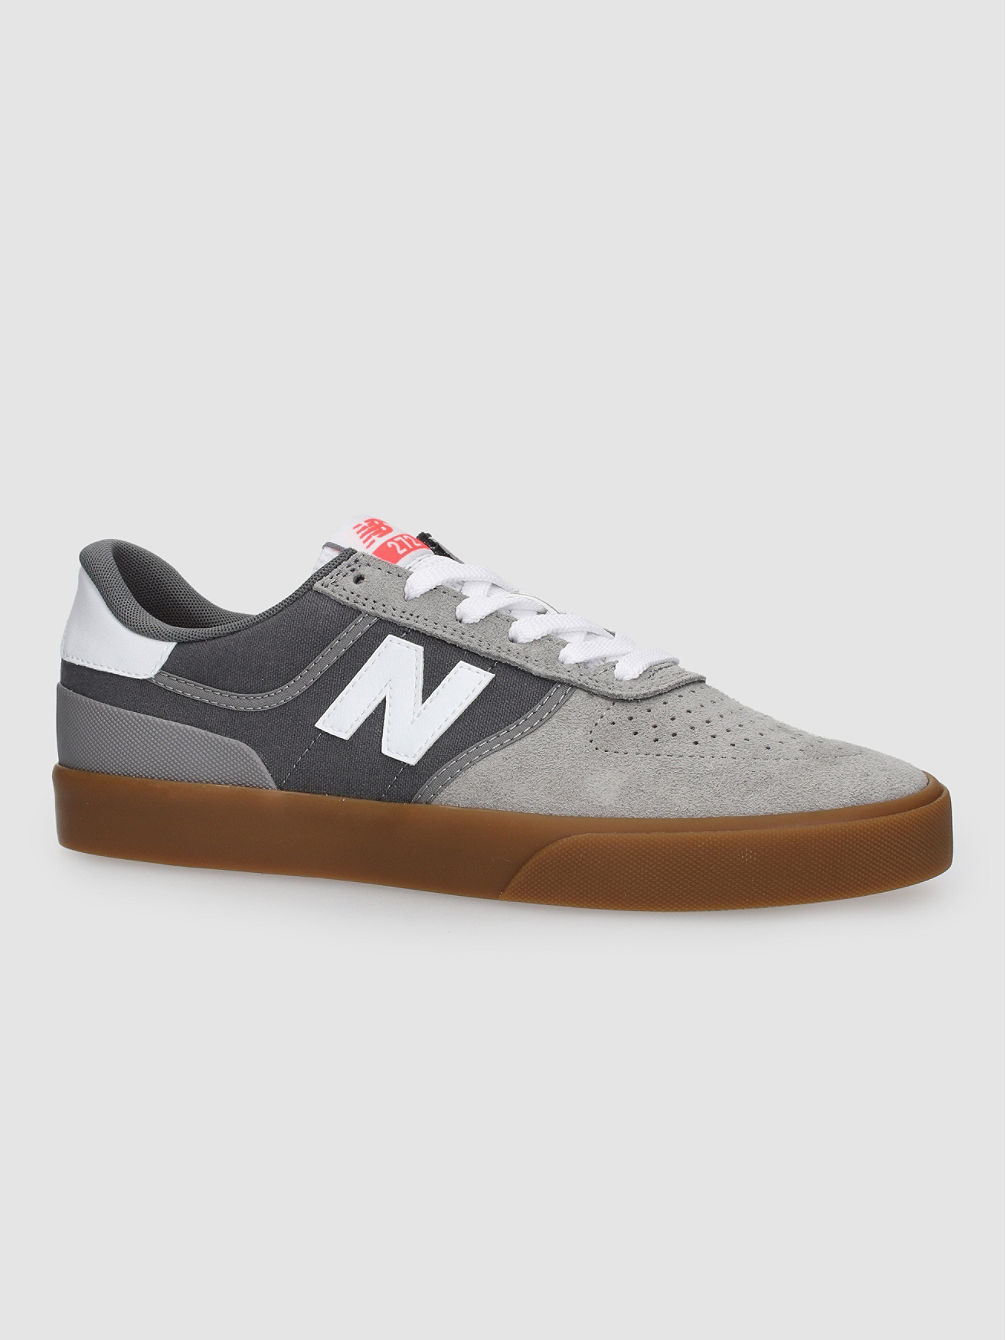 NM272GNG Chaussures de Skate